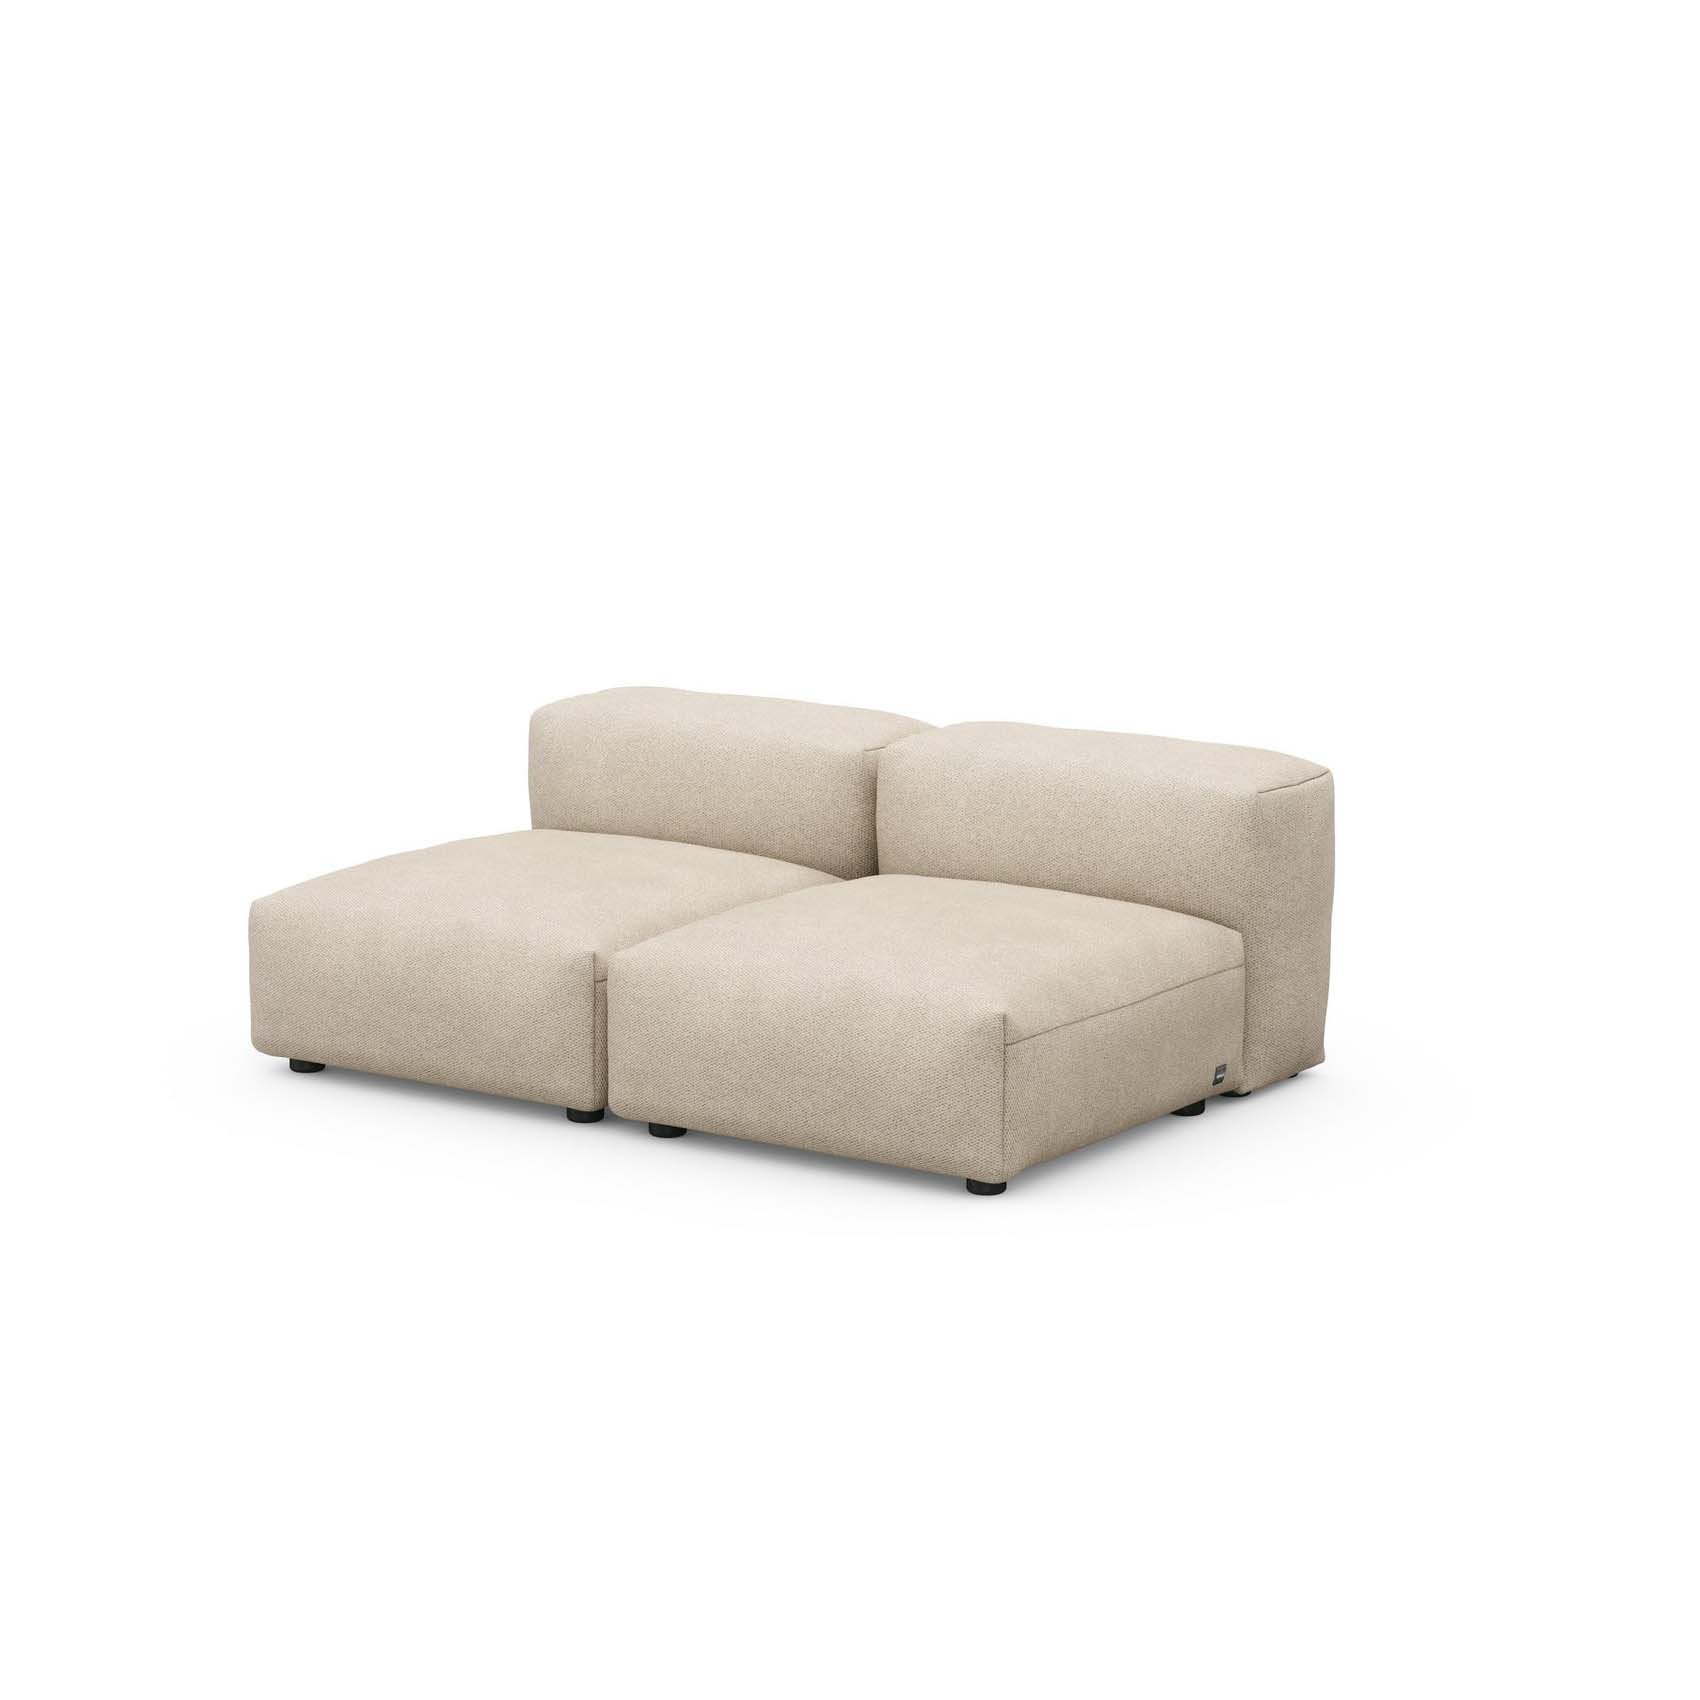 Two Seat Lounge Sofa S Knit Stone